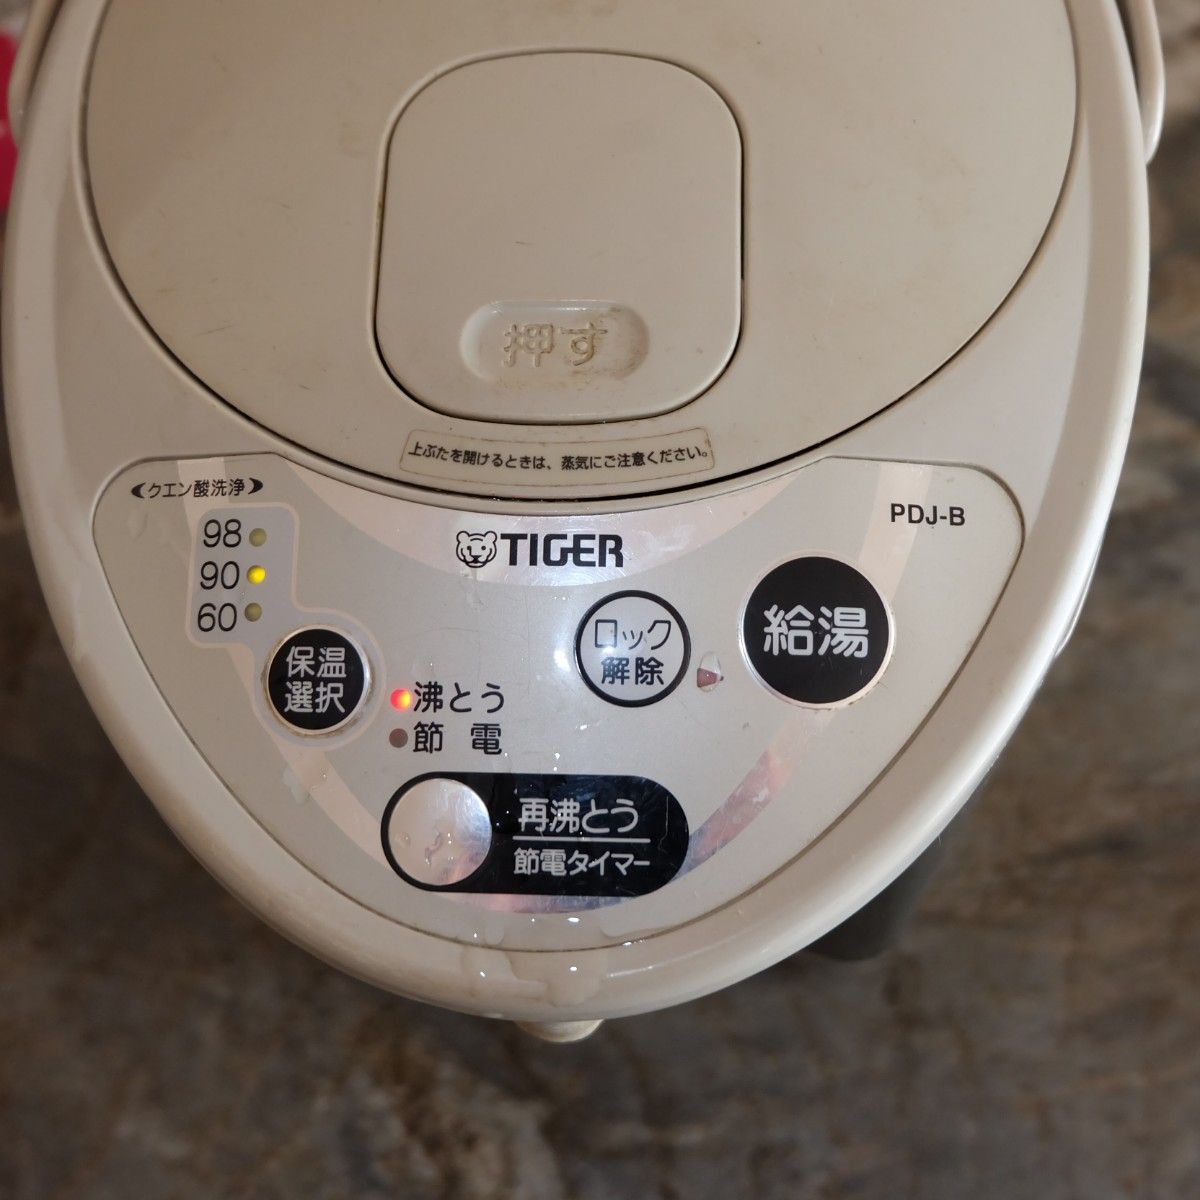 TIGER タイガー電気ポット マイコン電動ポット PDJ-B30A 3.0L 3L ケーブルなし 2007年製